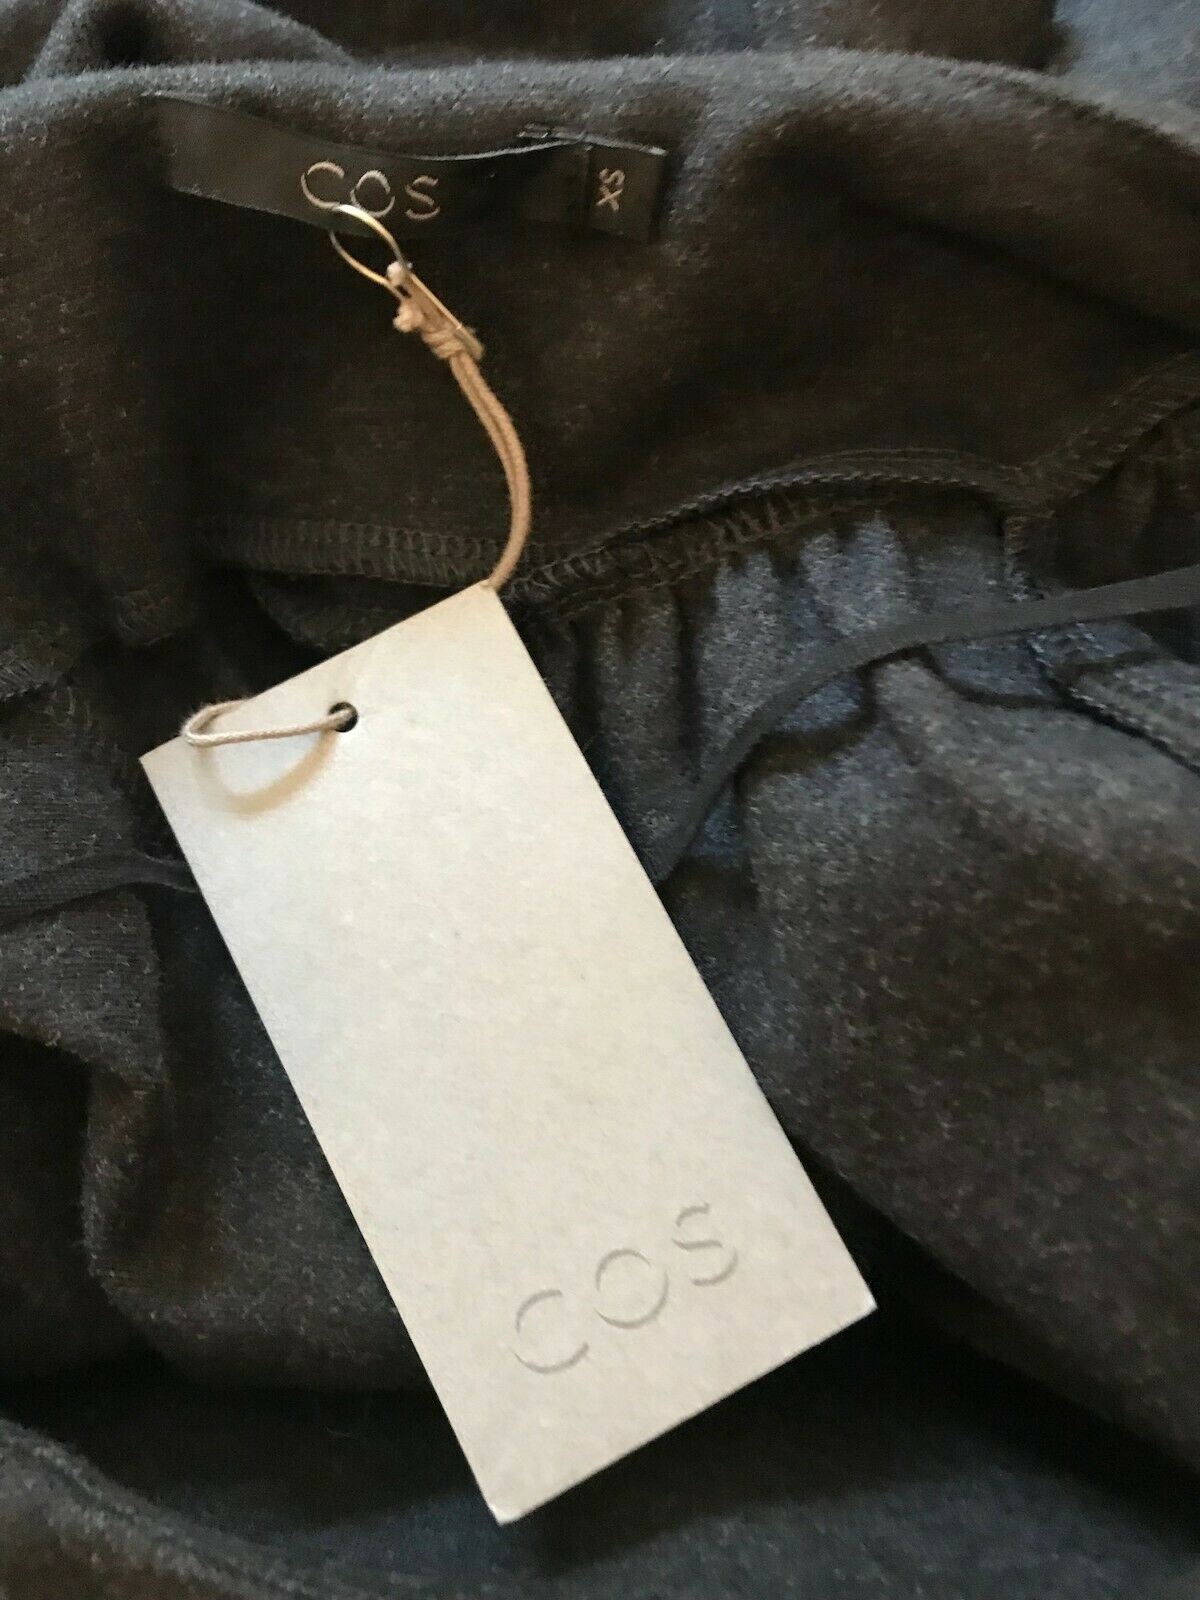 Cos Grey Wool Blend Oversize Smock Shift Dress UK 8 US 4 EU 36 Timeless Fashions